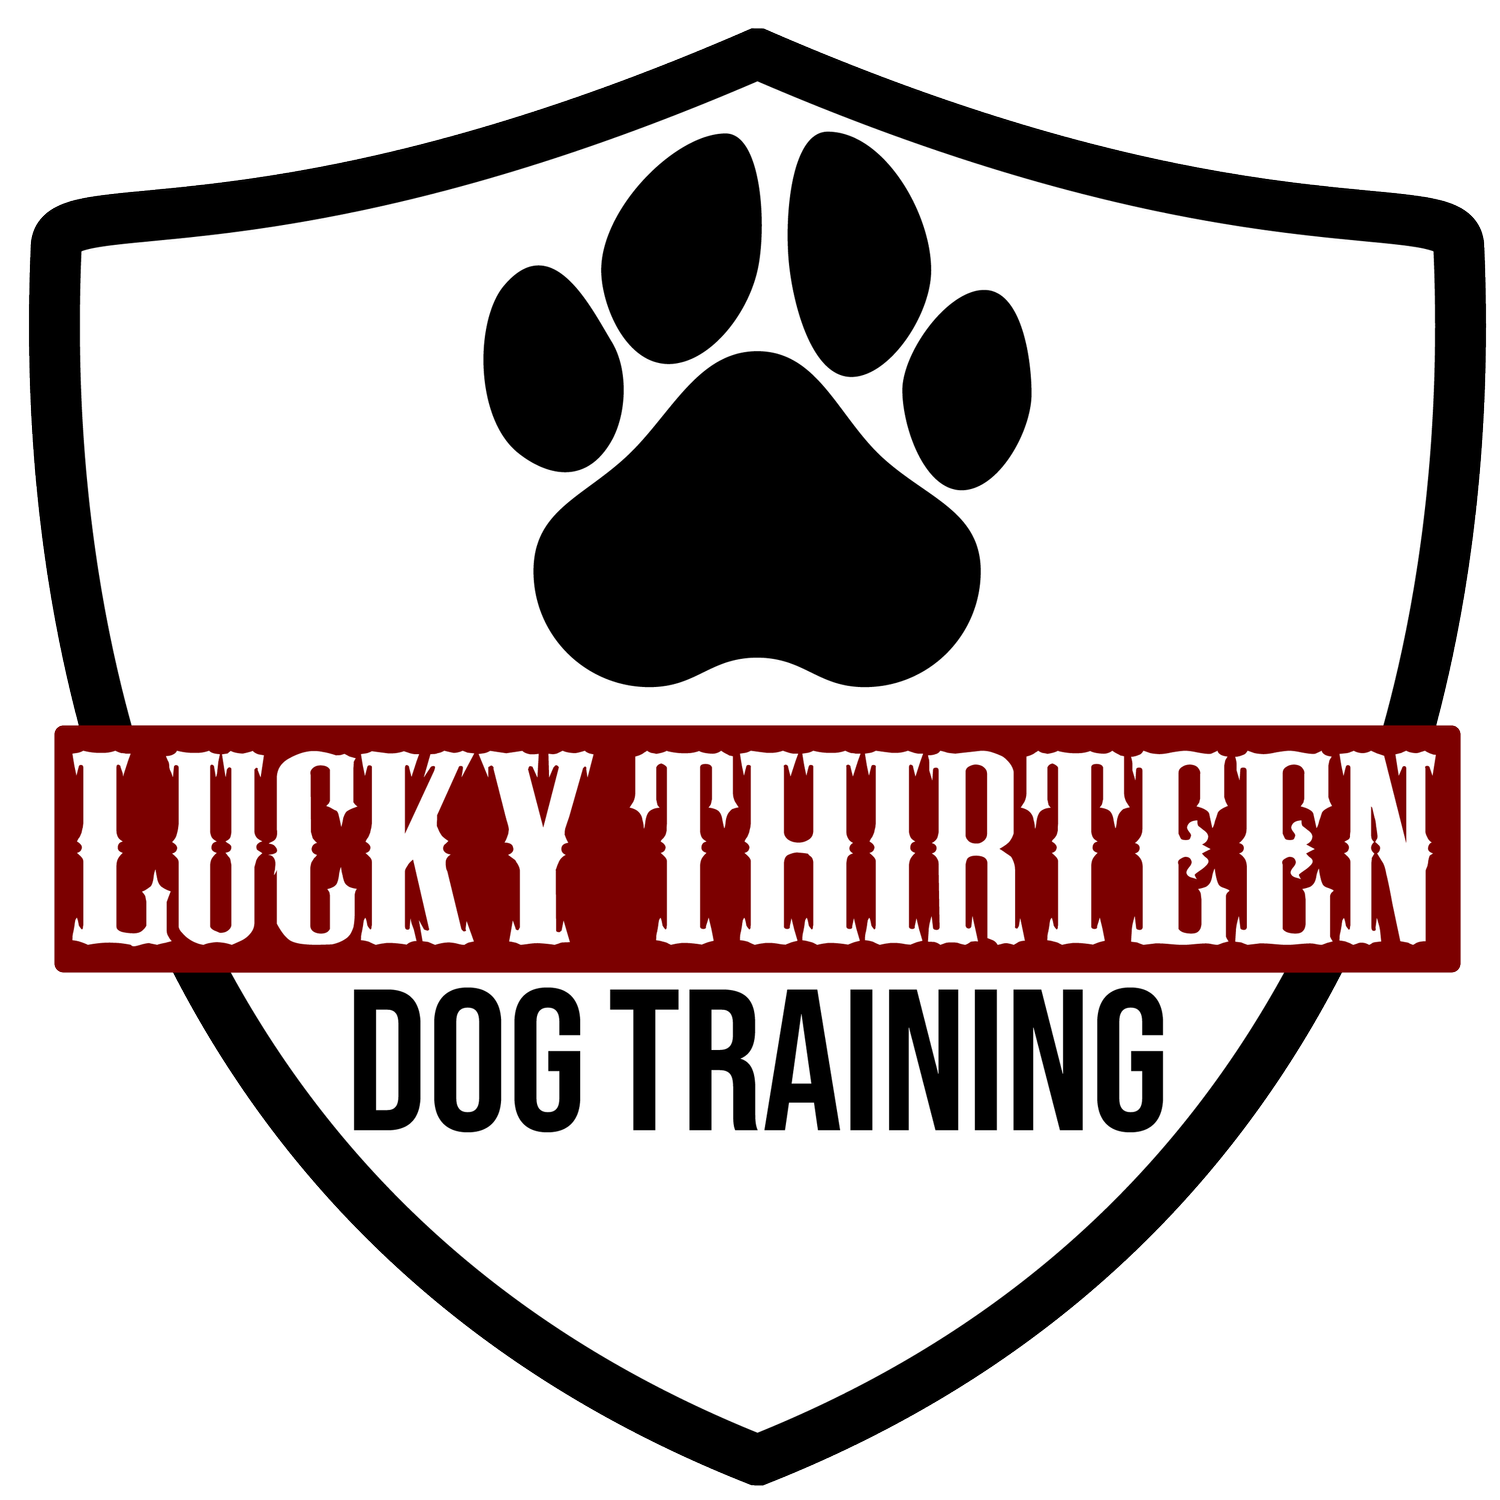 Lucky Thirteen Dog Training